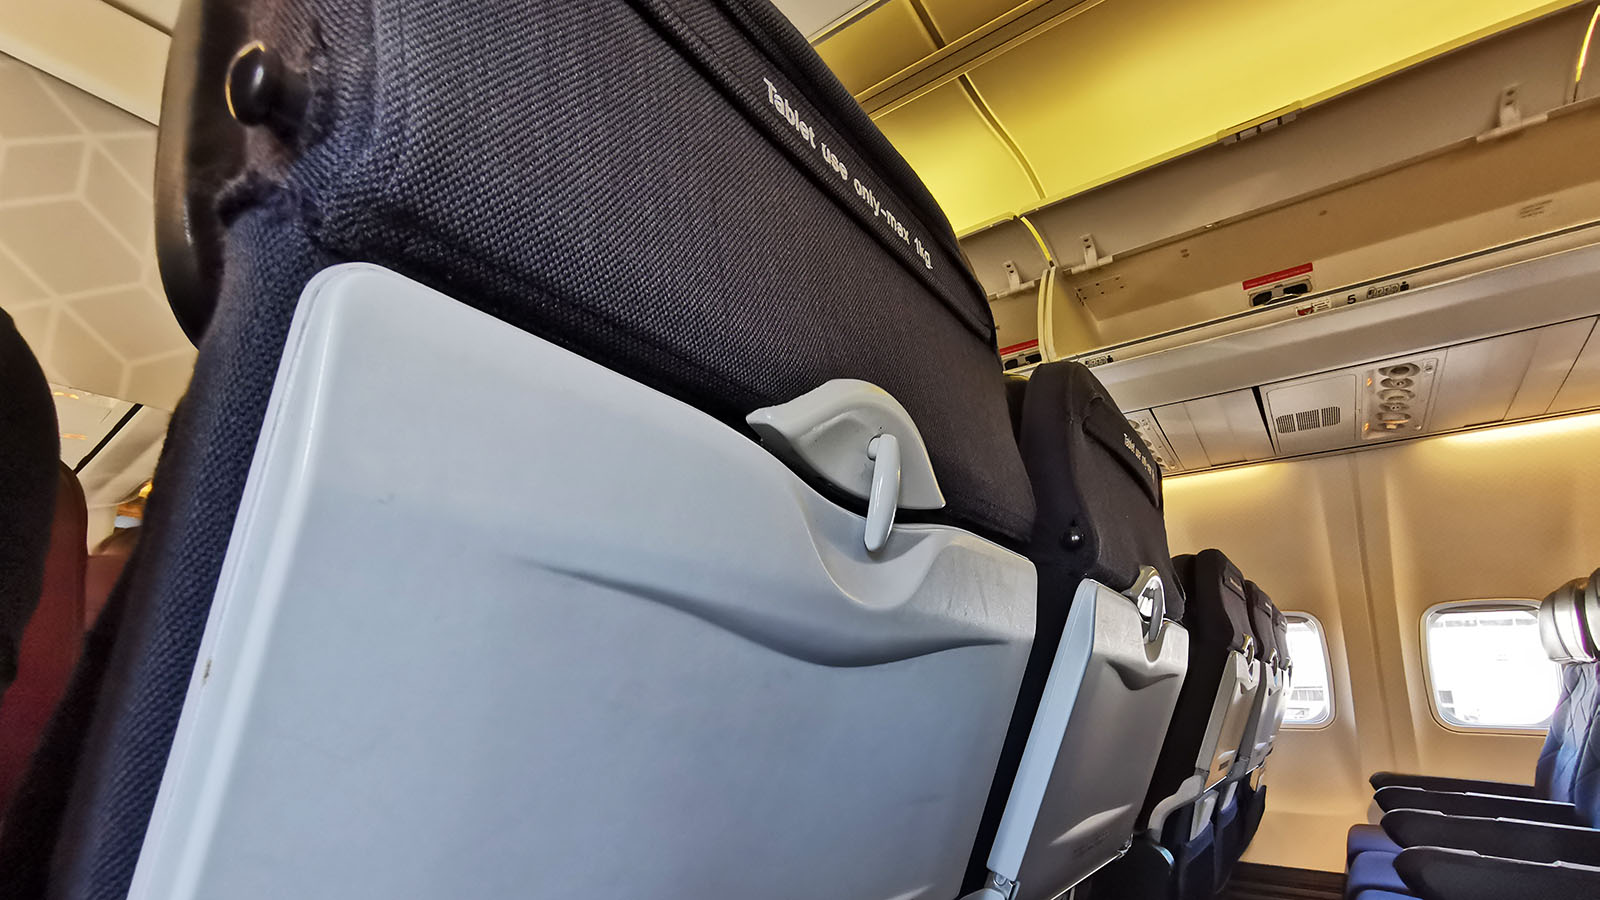 Qantas Boeing 737 Economy seat